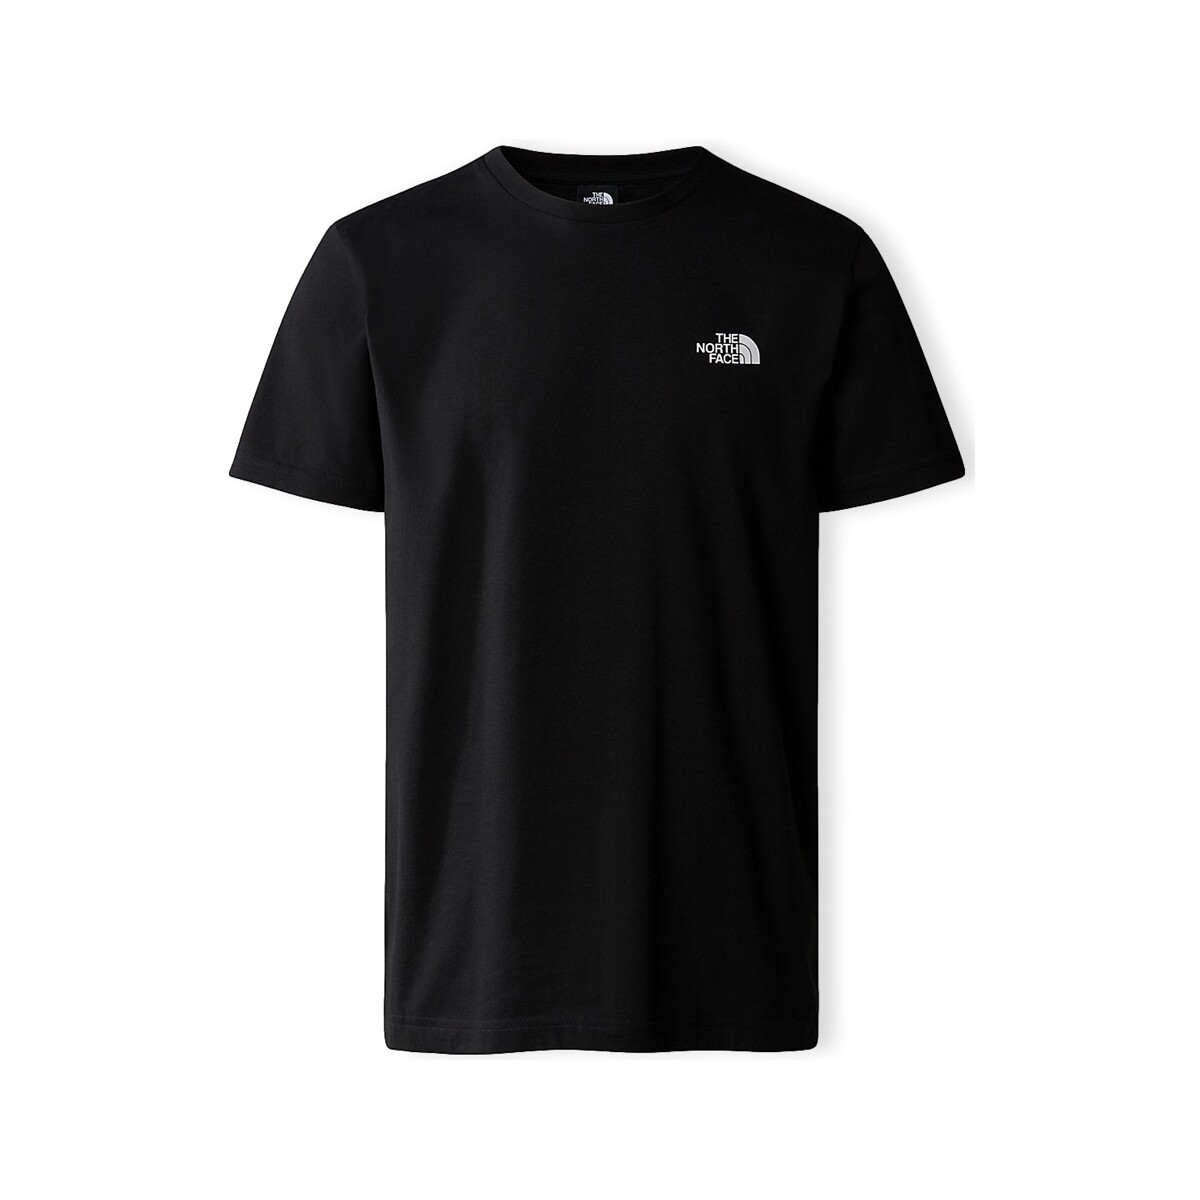 Îmbracaminte Bărbați Tricouri & Tricouri Polo The North Face Simple Dome T-Shirt - Black Negru